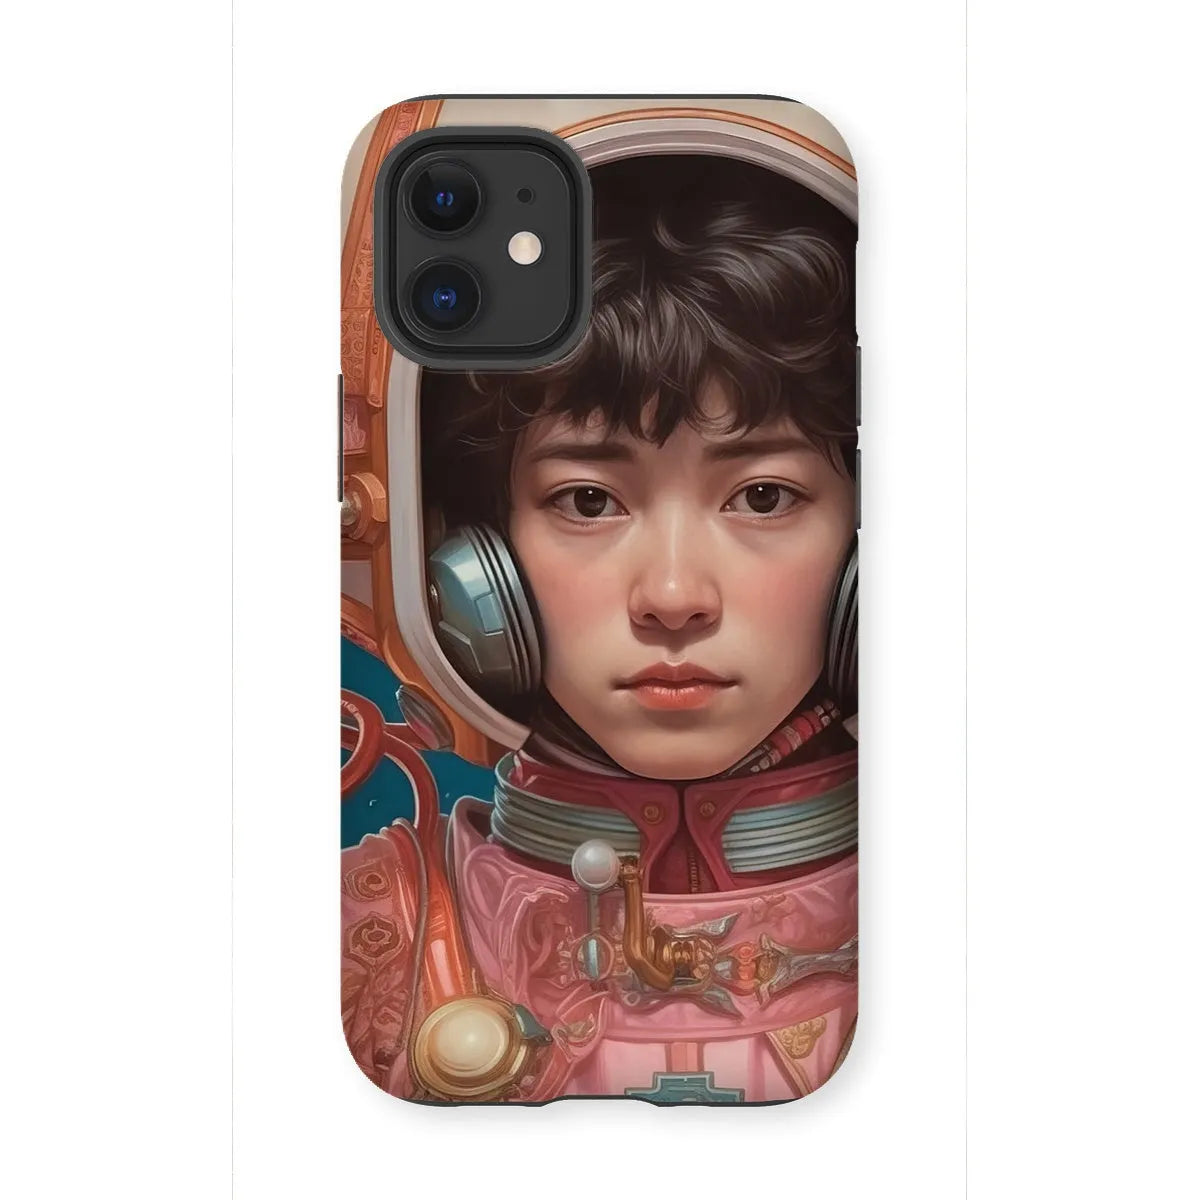 Kaito The Gay Astronaut - Lgbtq Art Phone Case - Iphone 12 Mini / Matte - Mobile Phone Cases - Aesthetic Art